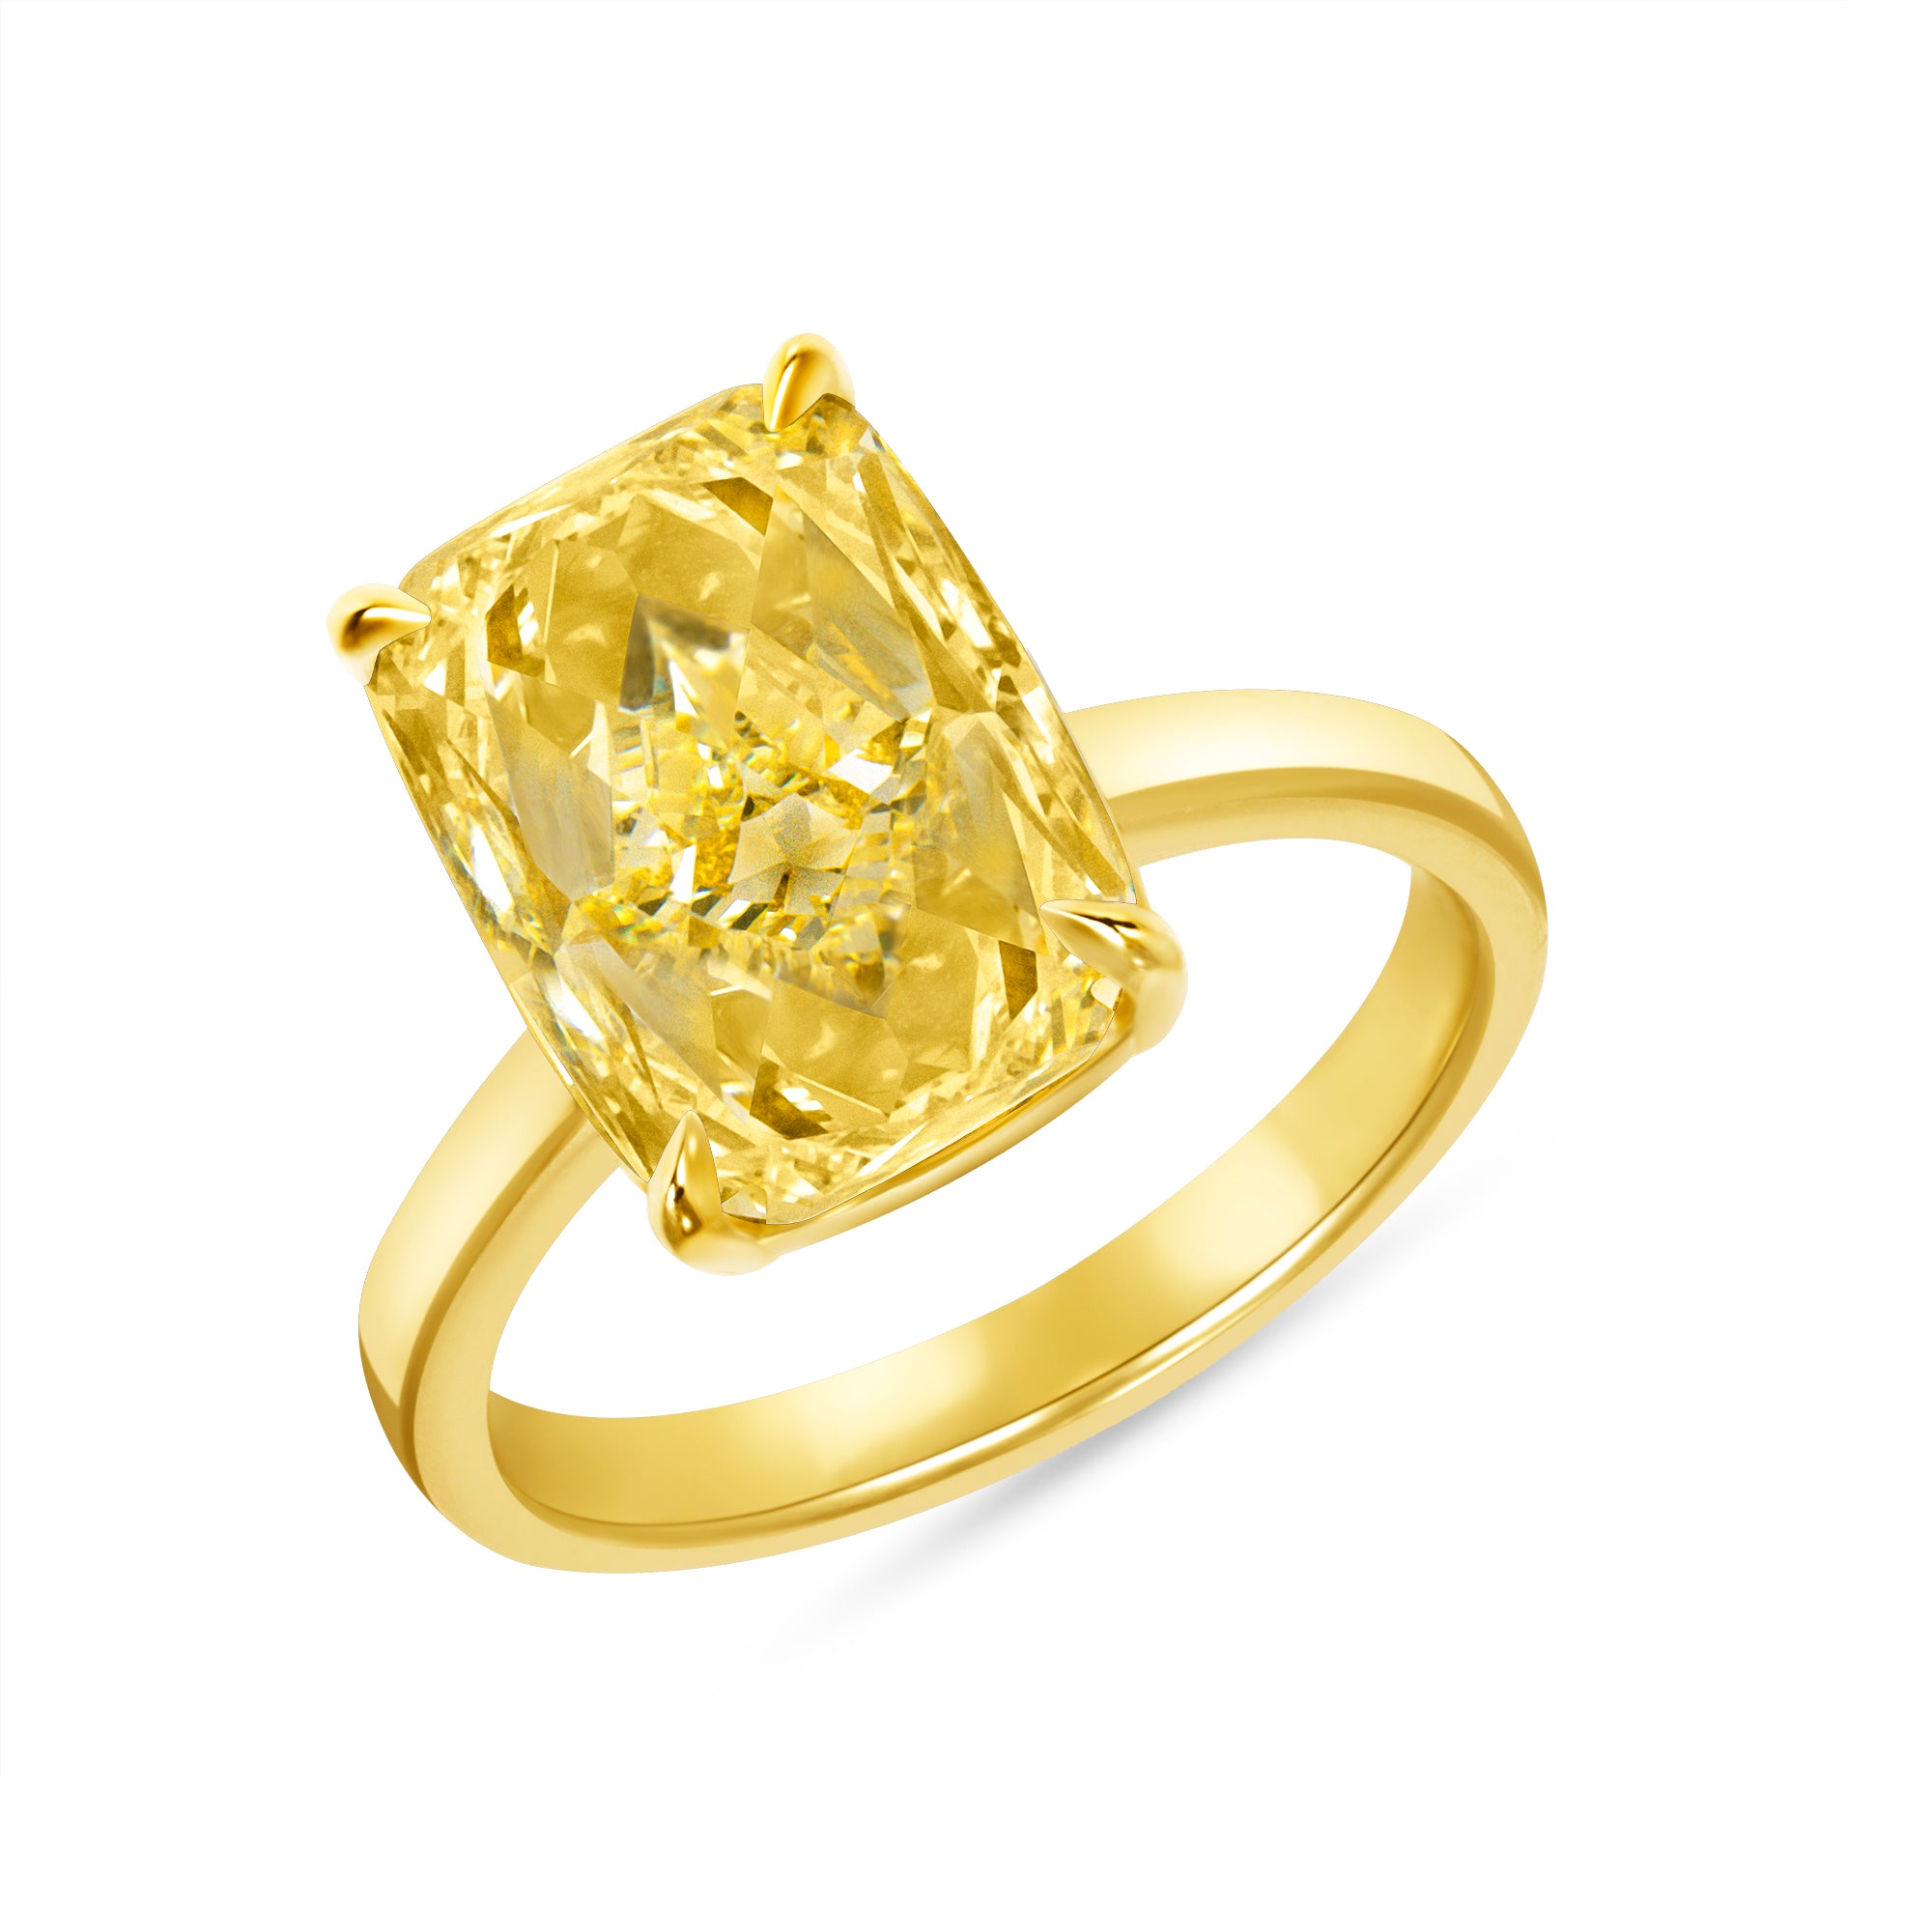 Cushion Cut Fancy Light Yellow Diamond Solitaire Ring in 18 Karat Yellow Gold